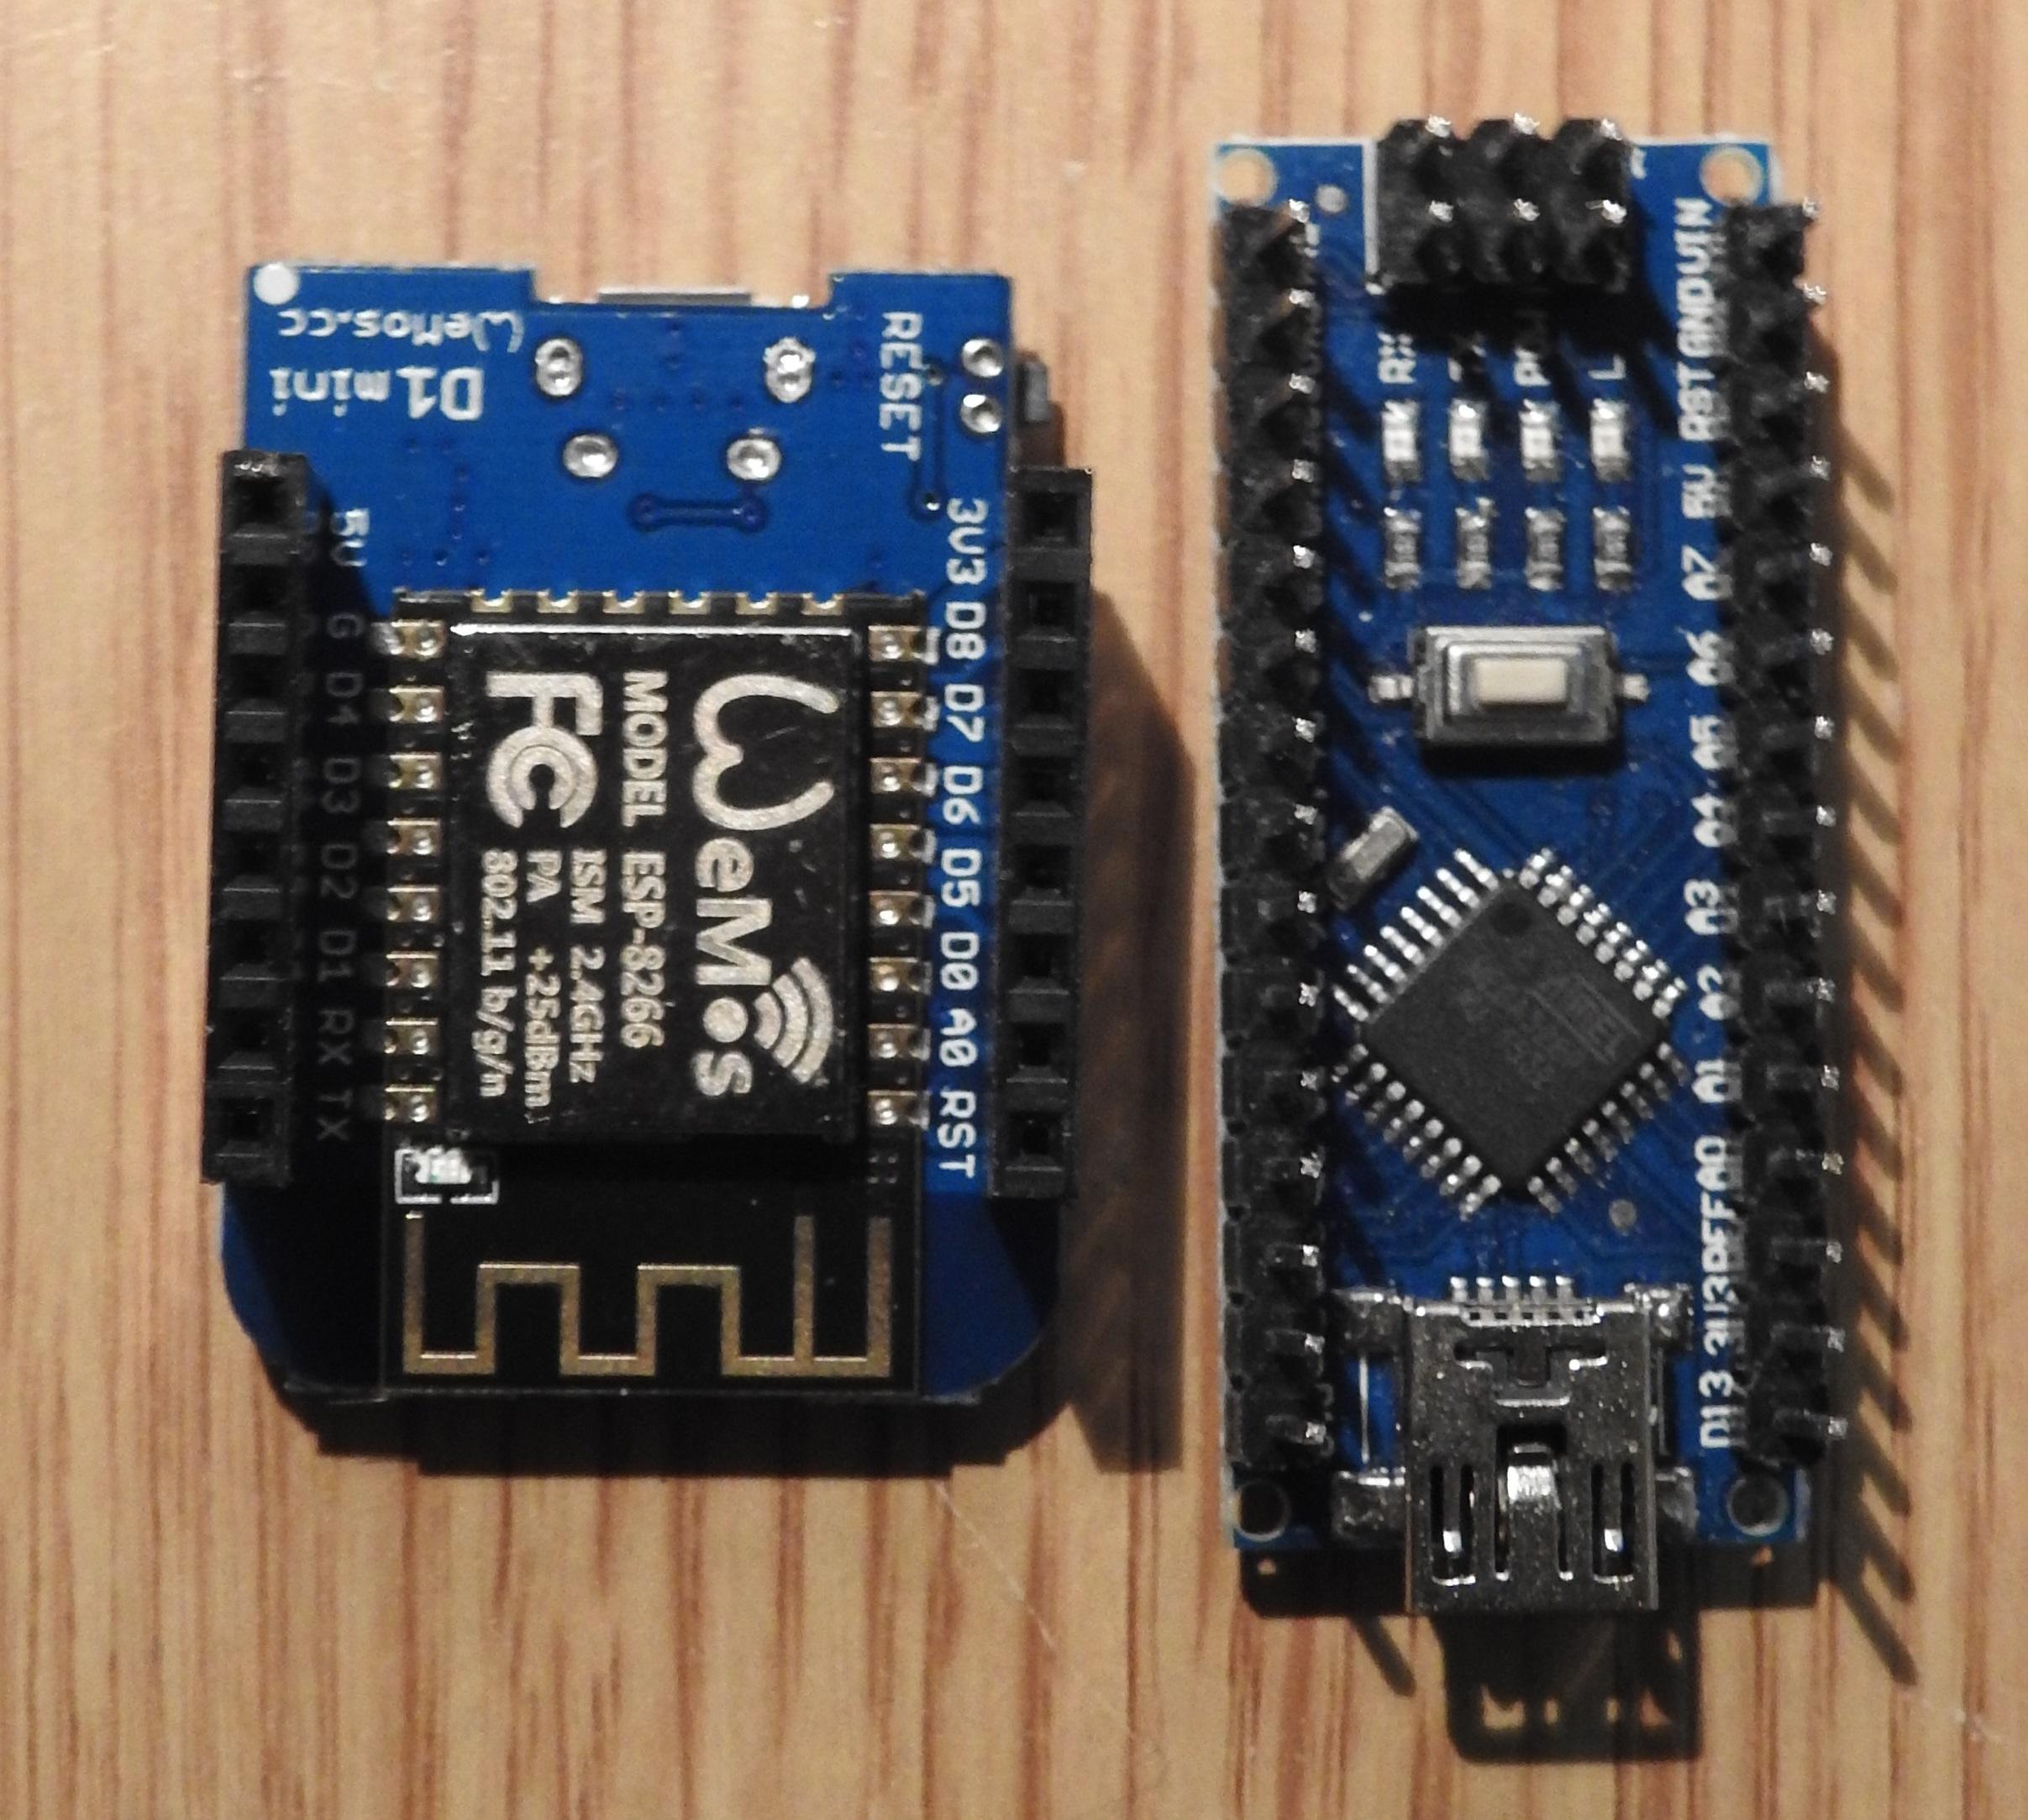 Wemos and Arduino nano